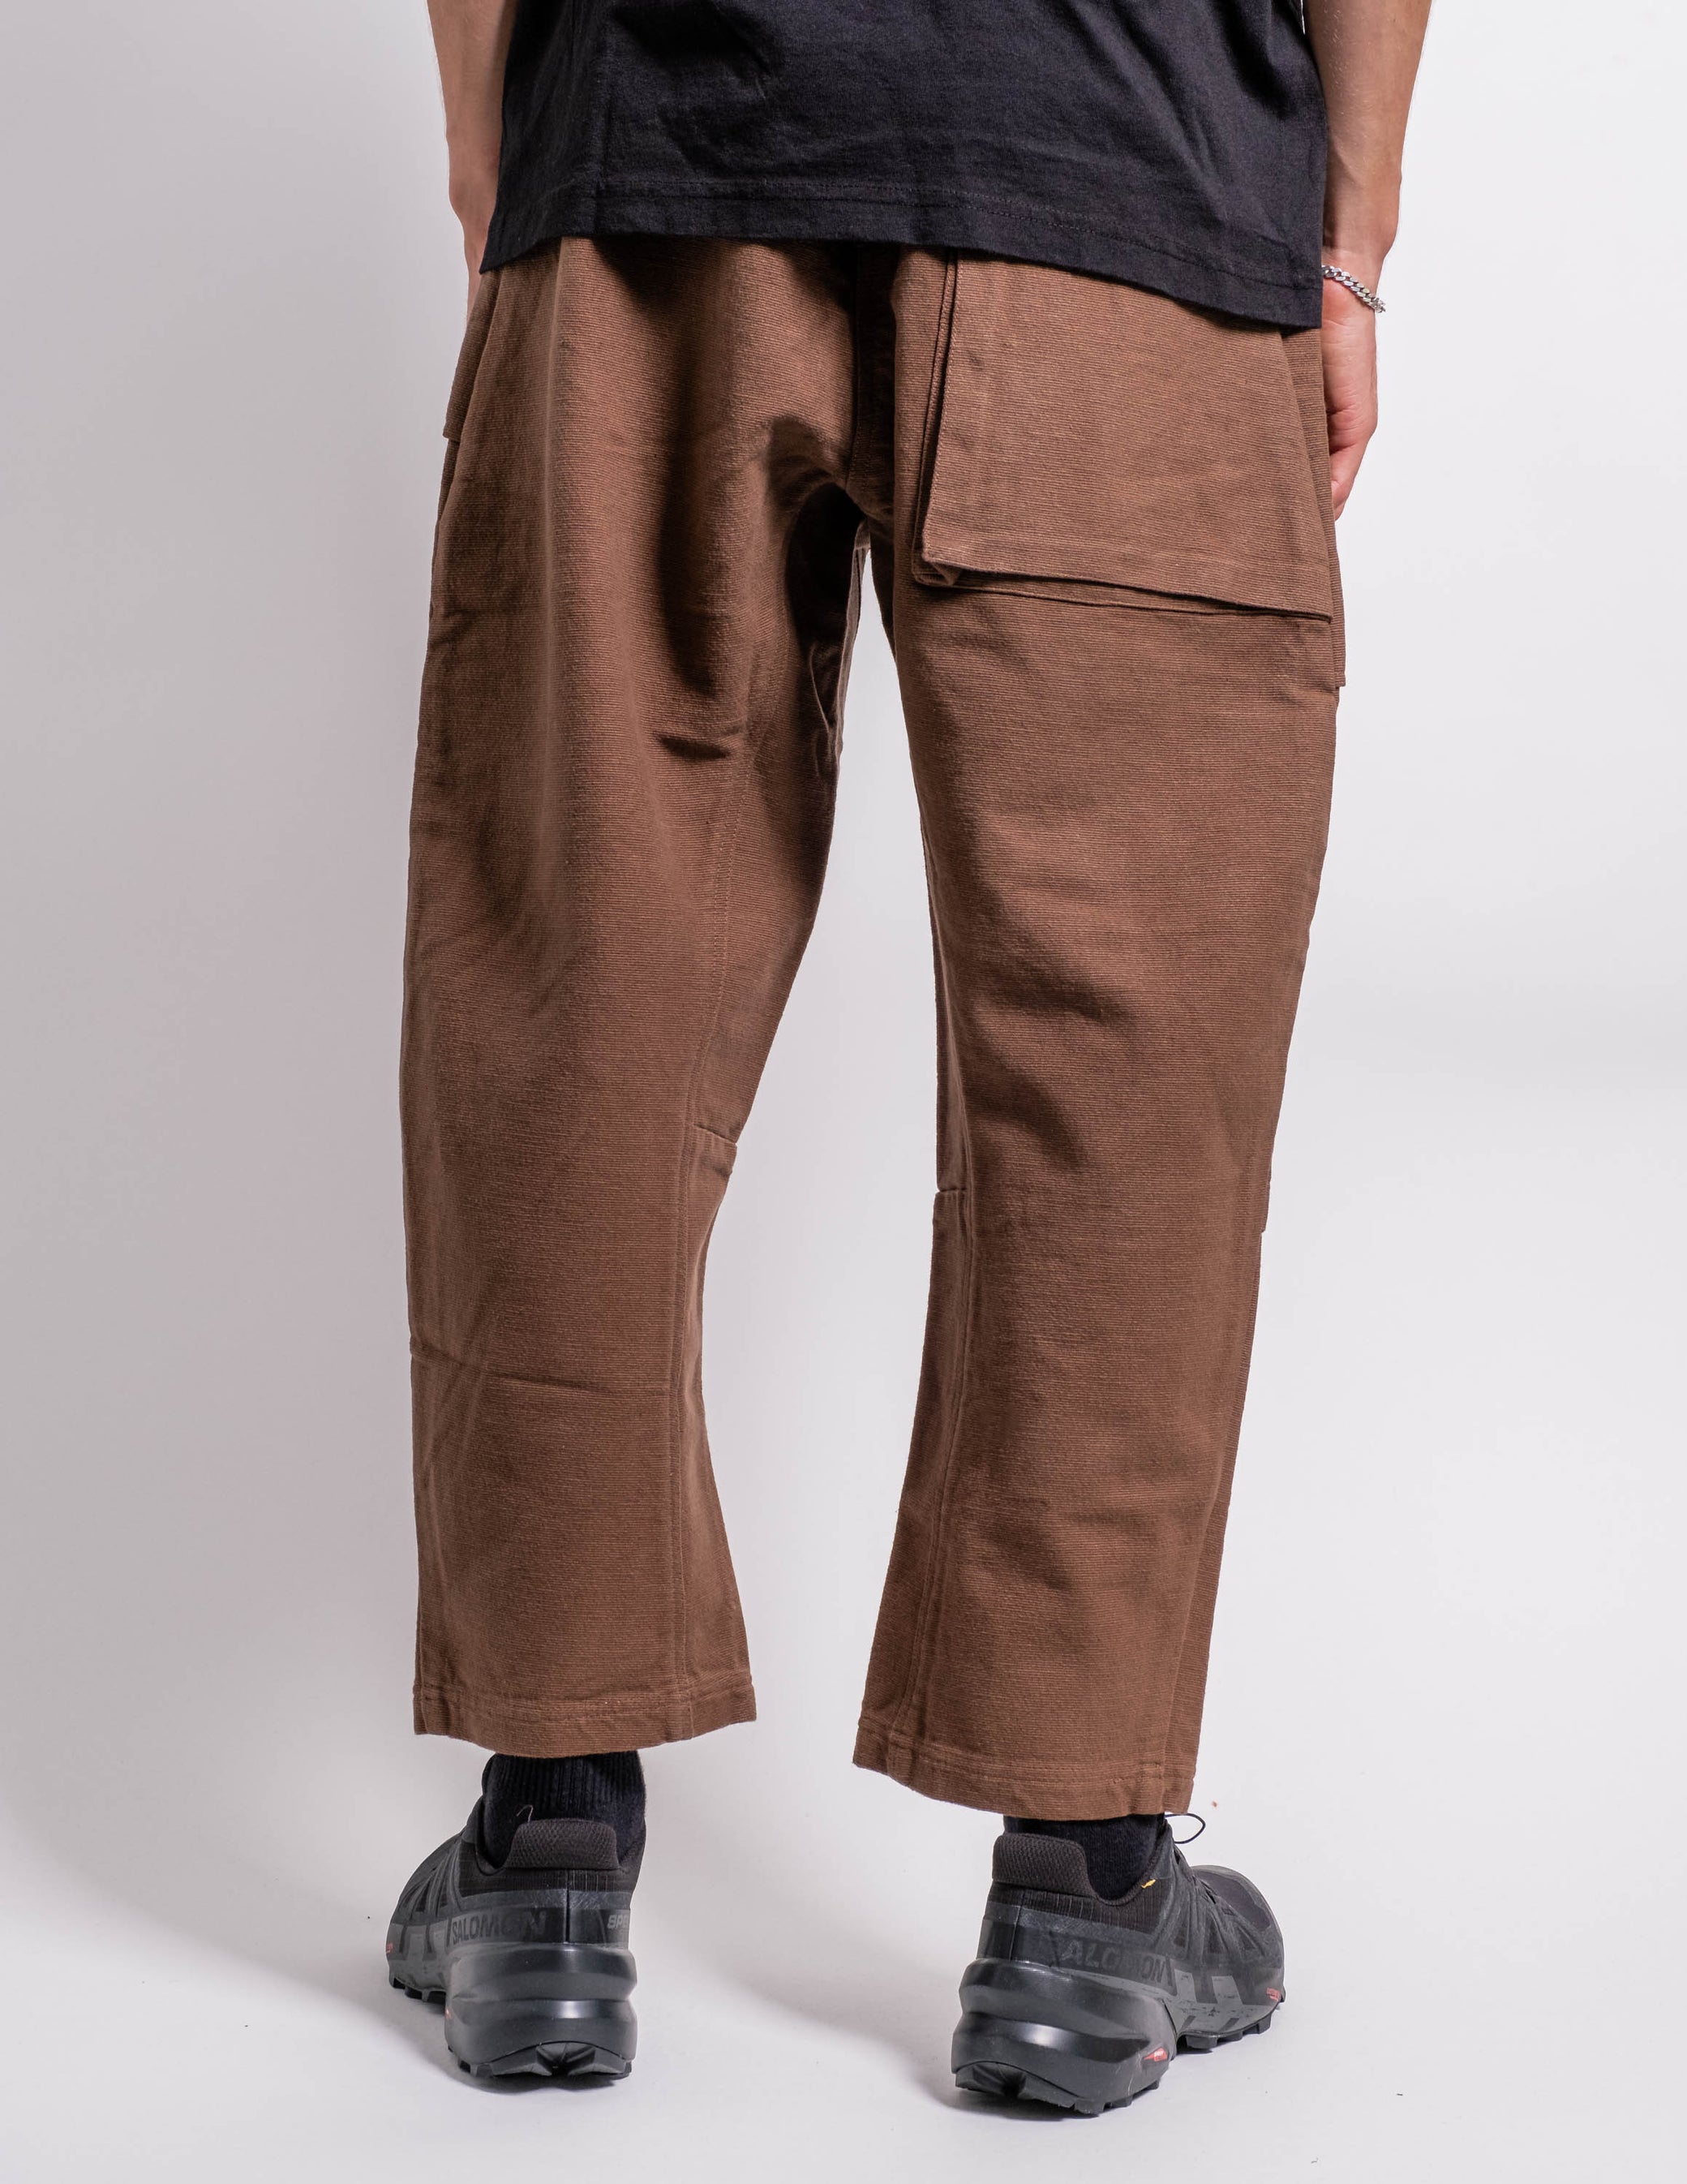 302X03 Champion KMO3 Duofold Originals Cotton/Wool Natural Thermal Men's  Pant